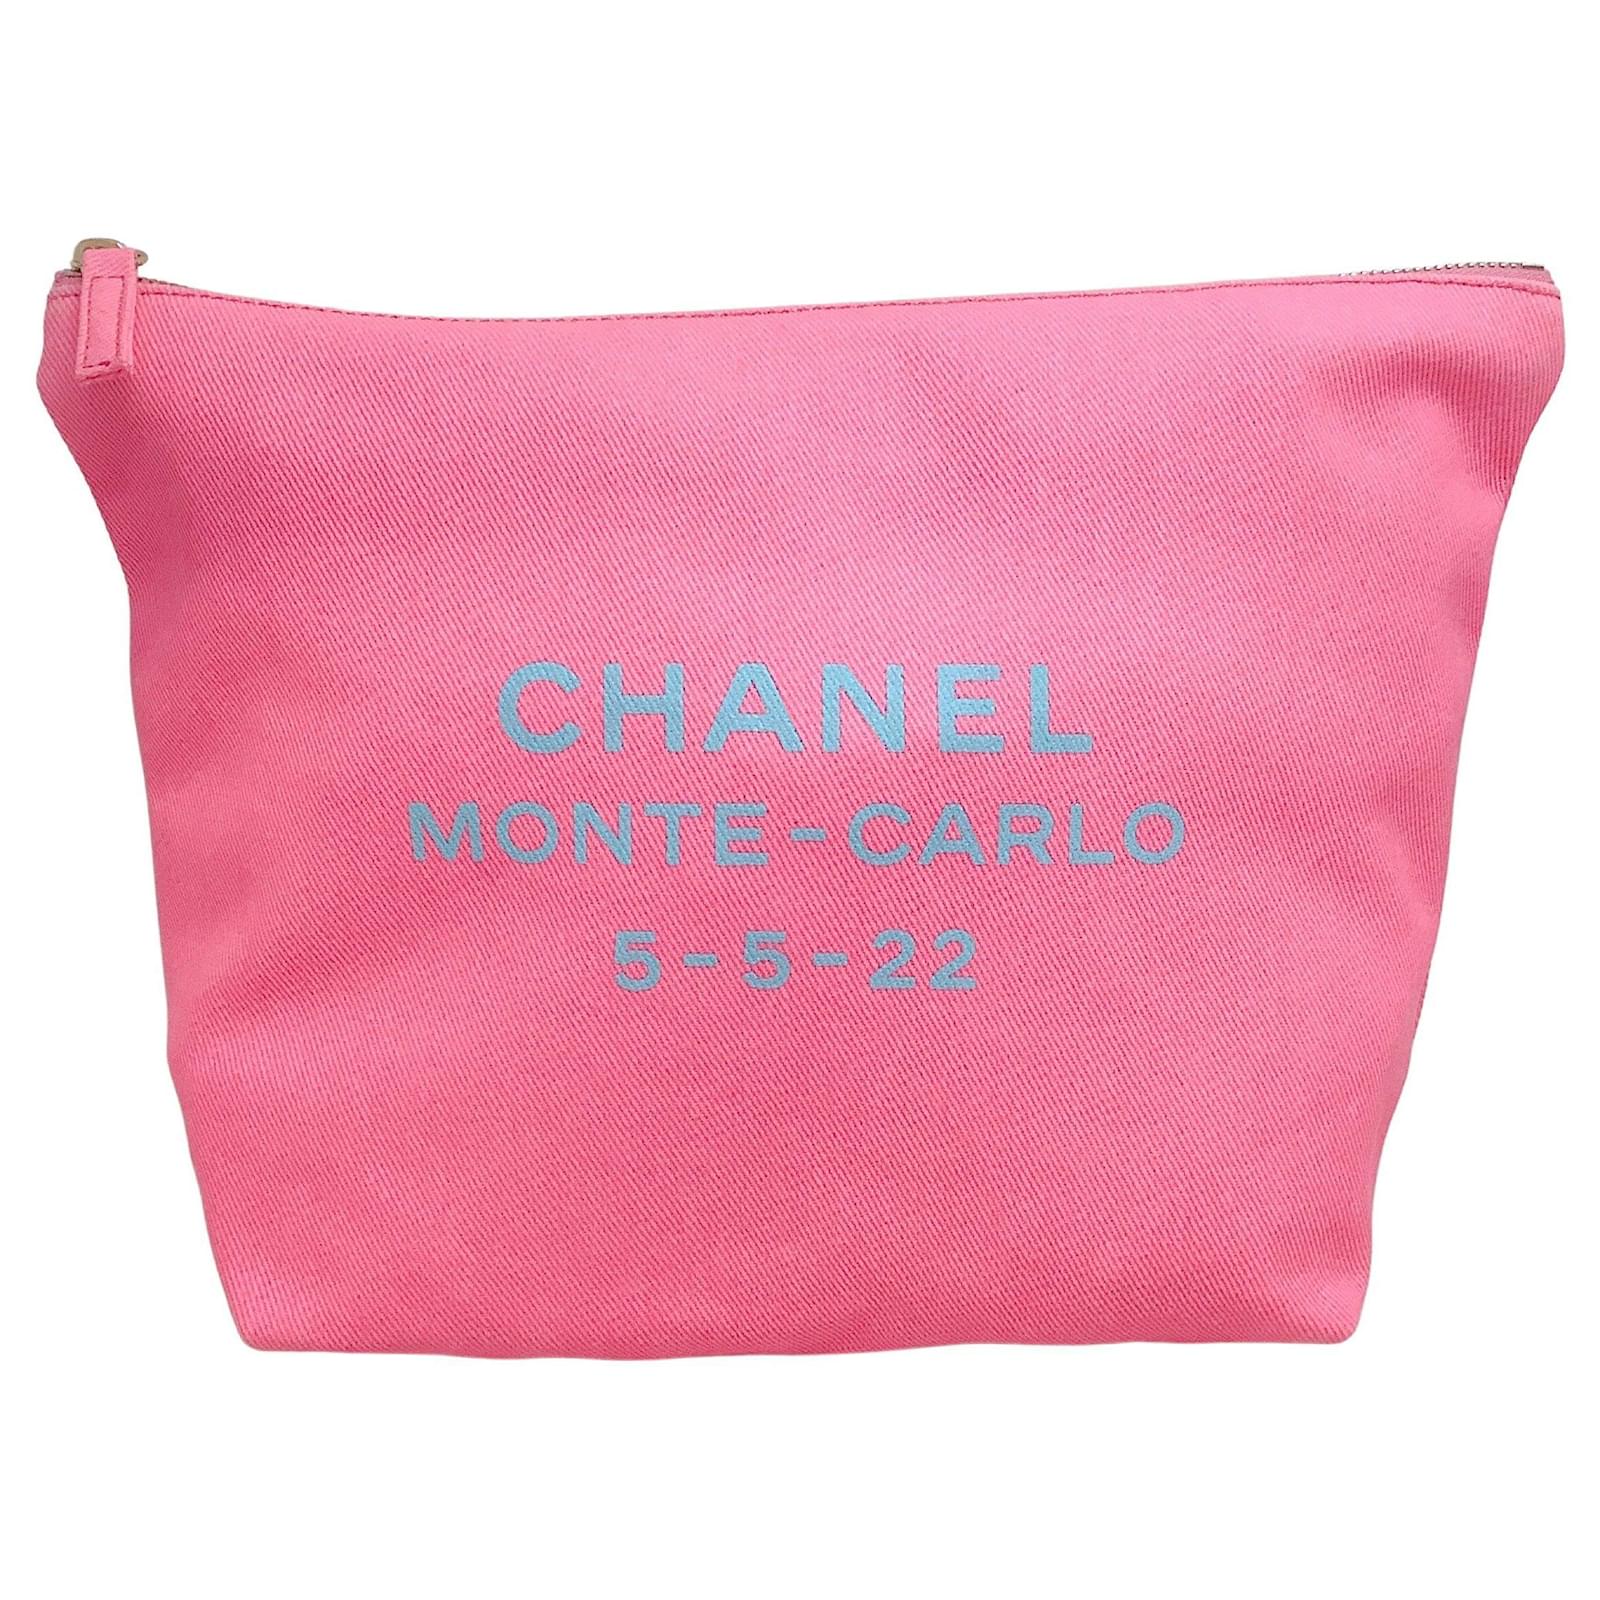 Chanel 5-2-22 Monte Carlo Pink Canvas Clutch